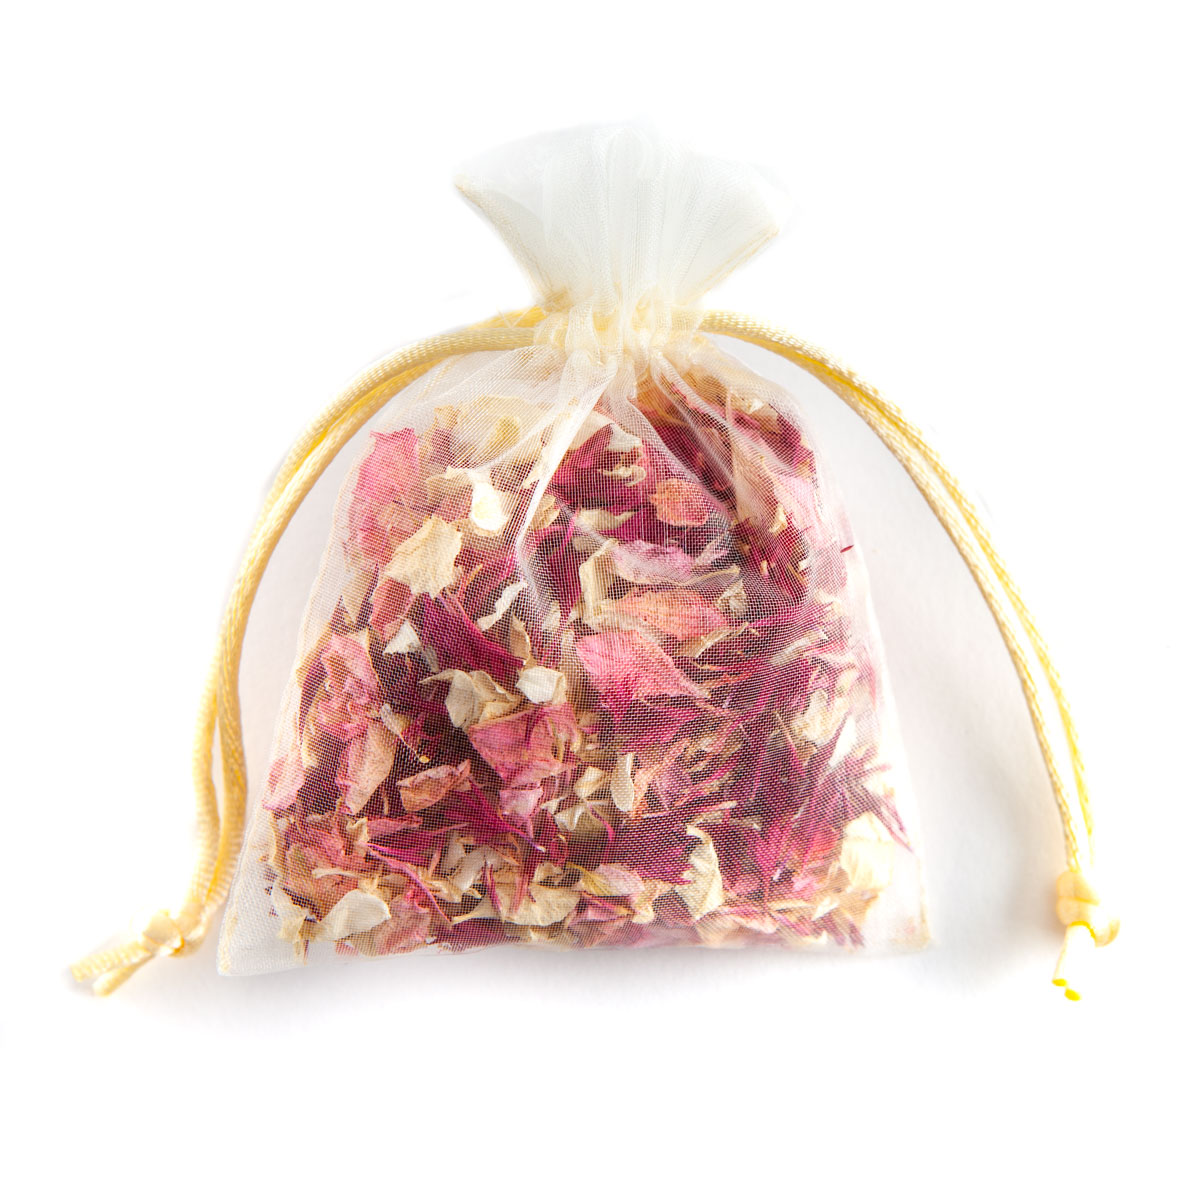 Ruby Twist confetti petals - Biodegradable Confetti - Real Flower Petal Confetti - Petal Bag